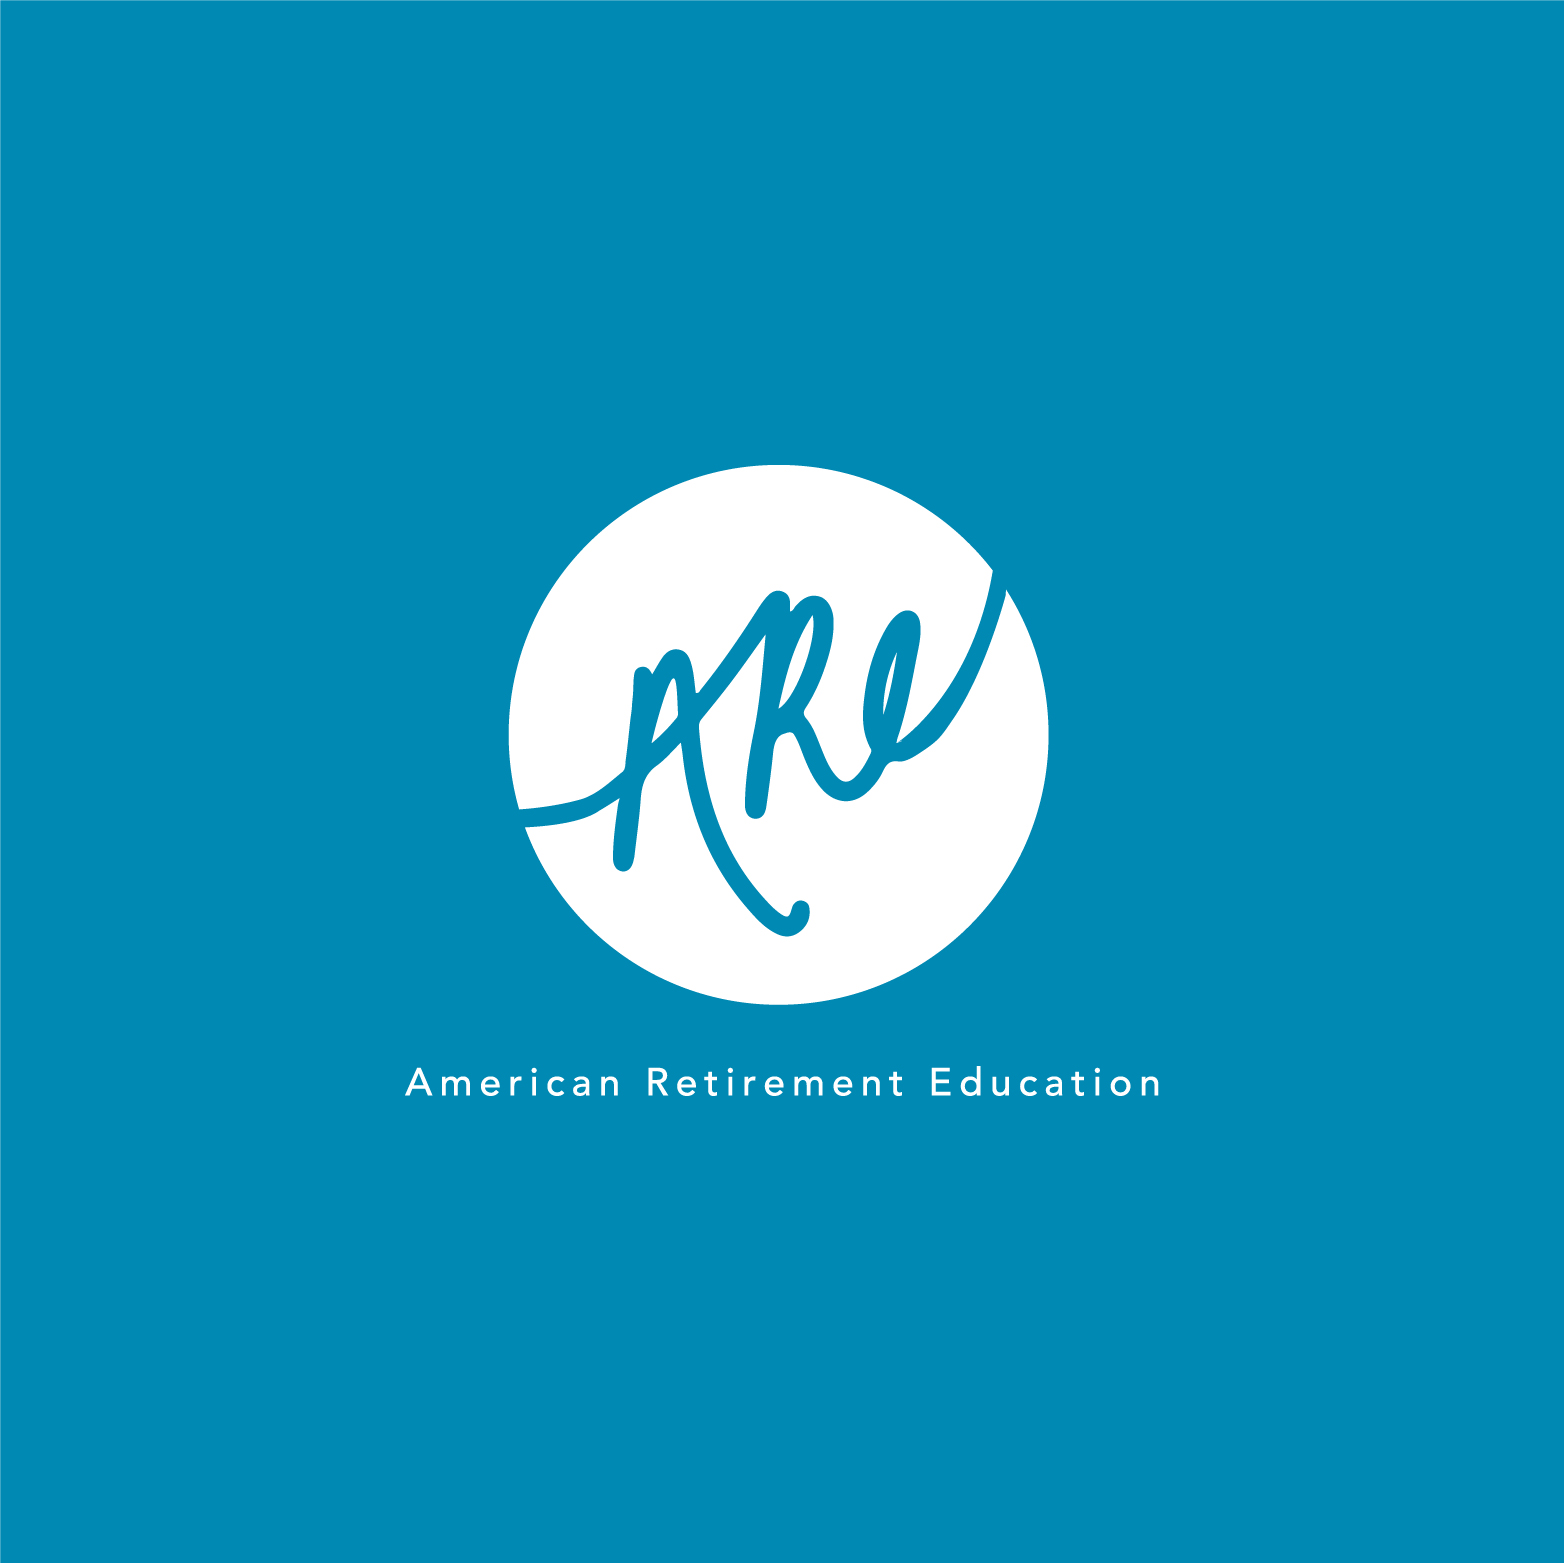 American Retirement Education logo